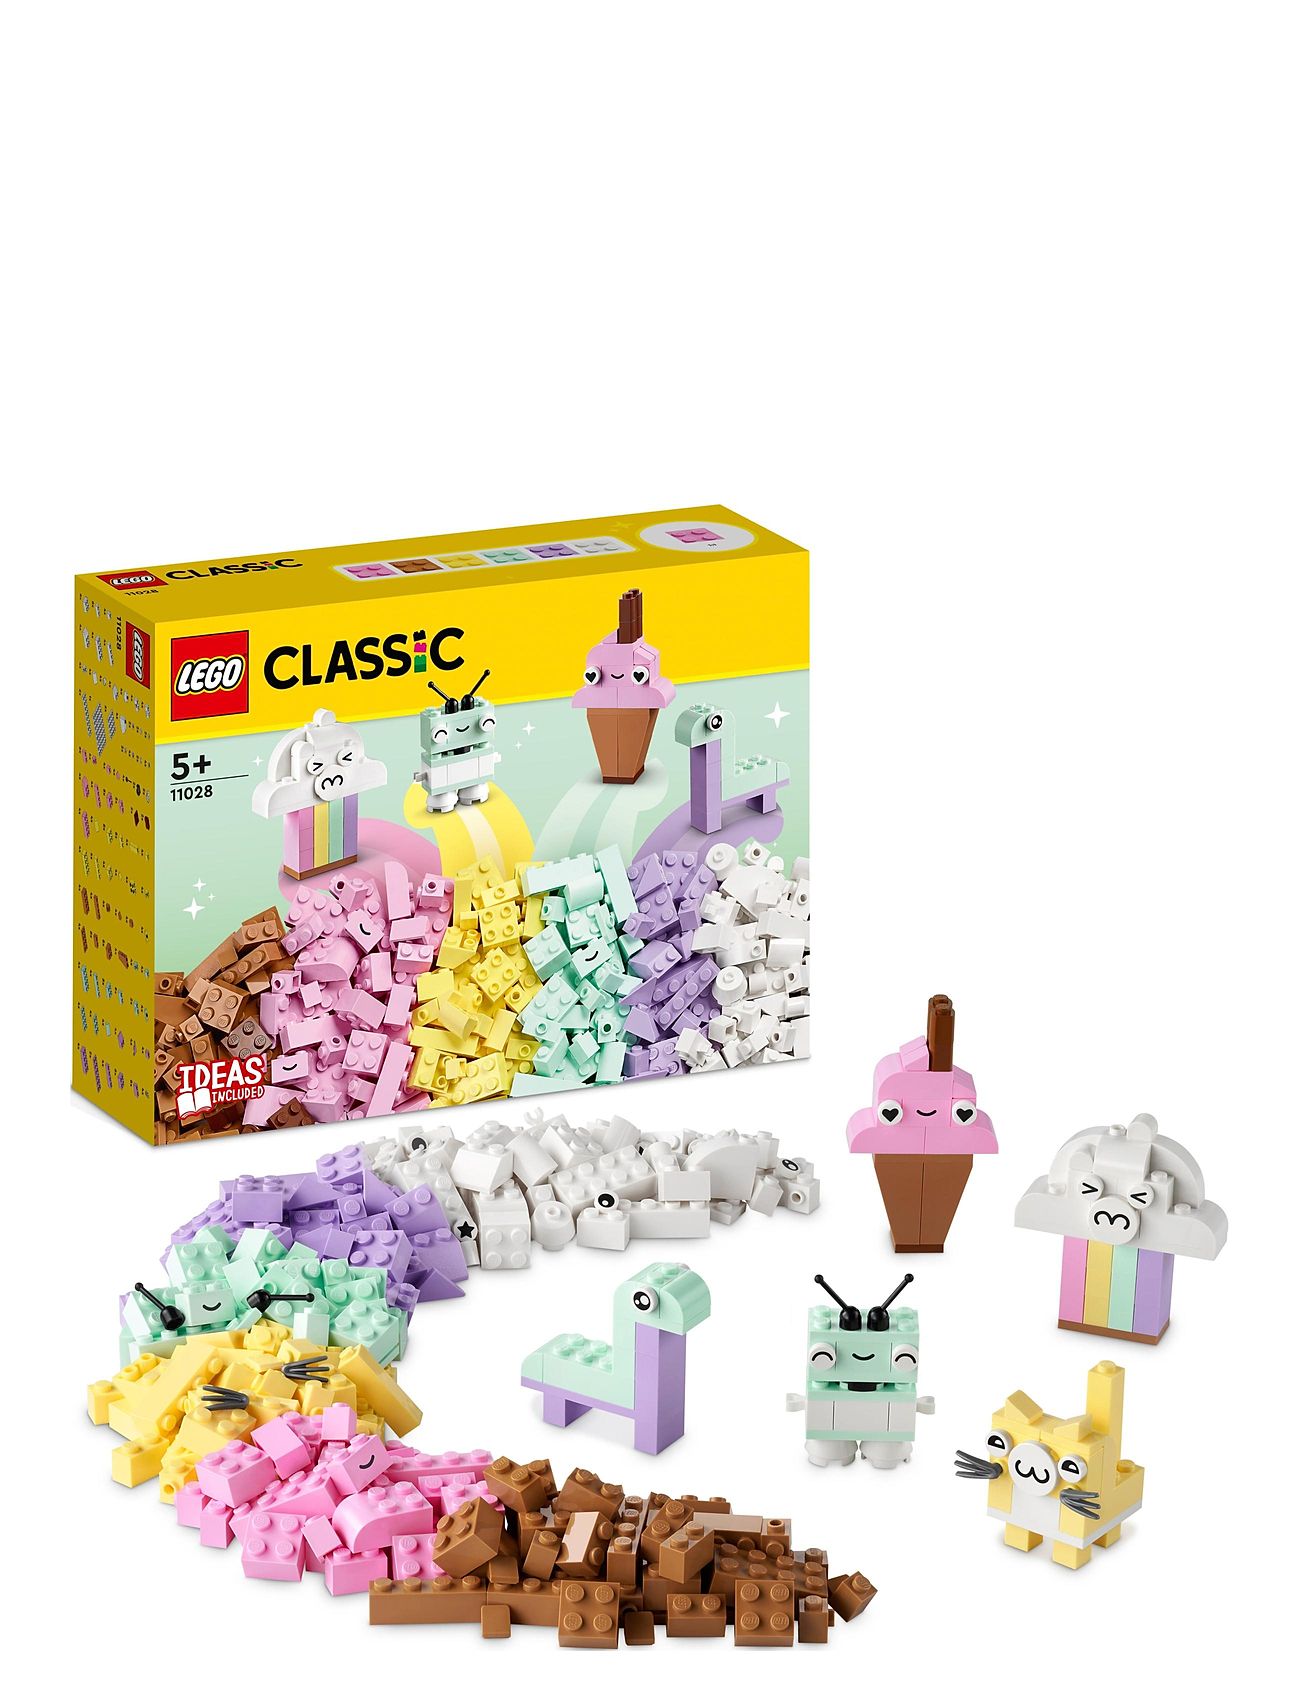 Creative Pastel Fun Building Bricks Toy Toys Lego Toys Lego classic Multi/patterned LEGO